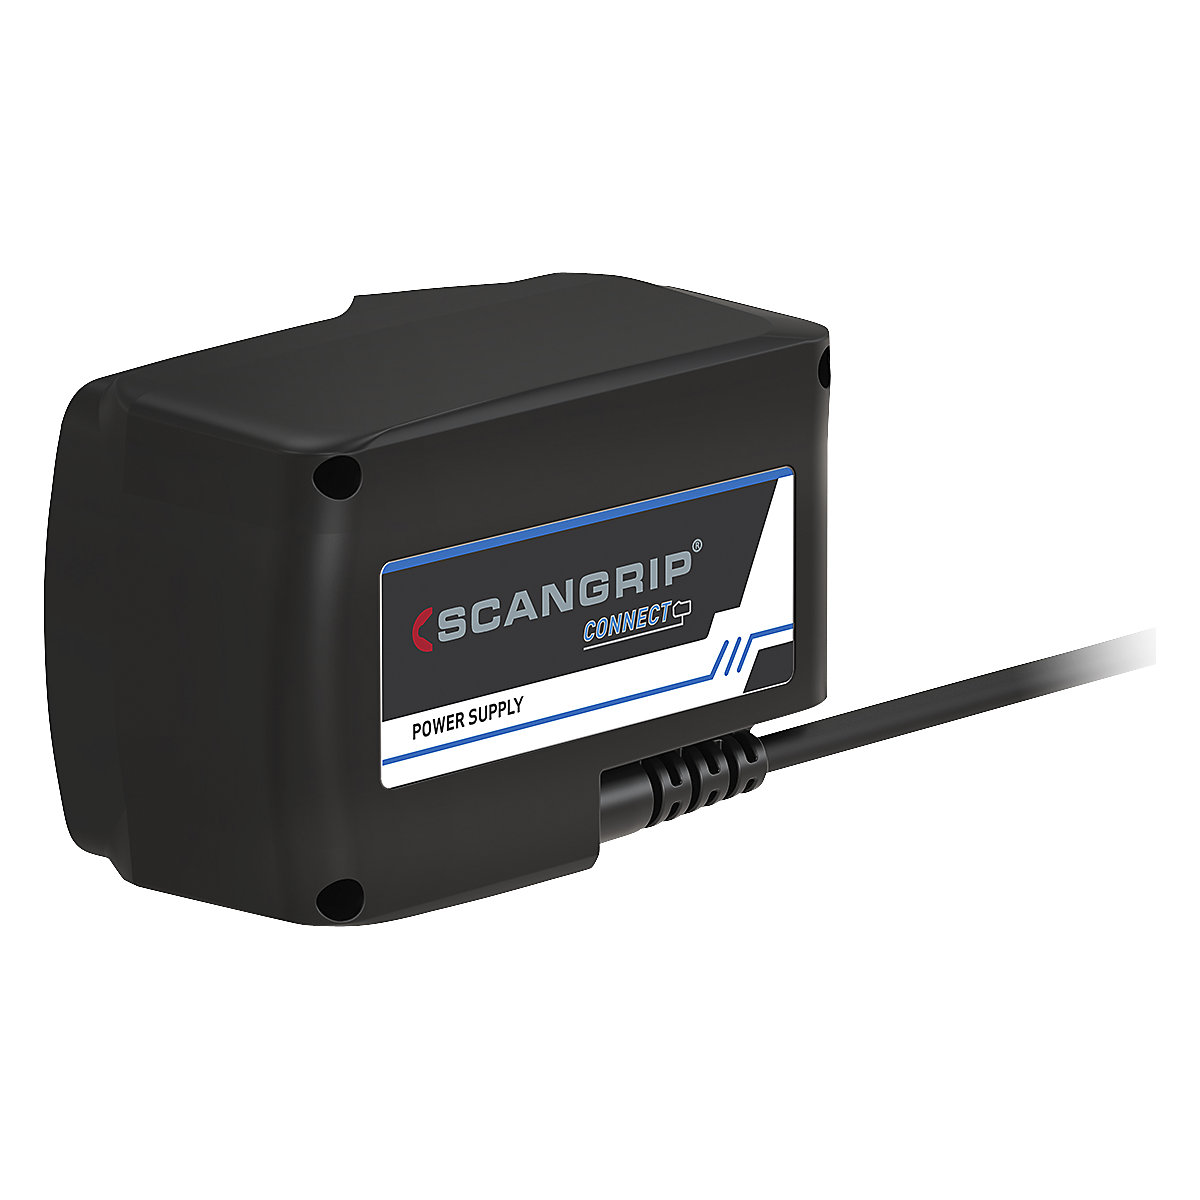 POWER SUPPLY CAS power supply unit - SCANGRIP